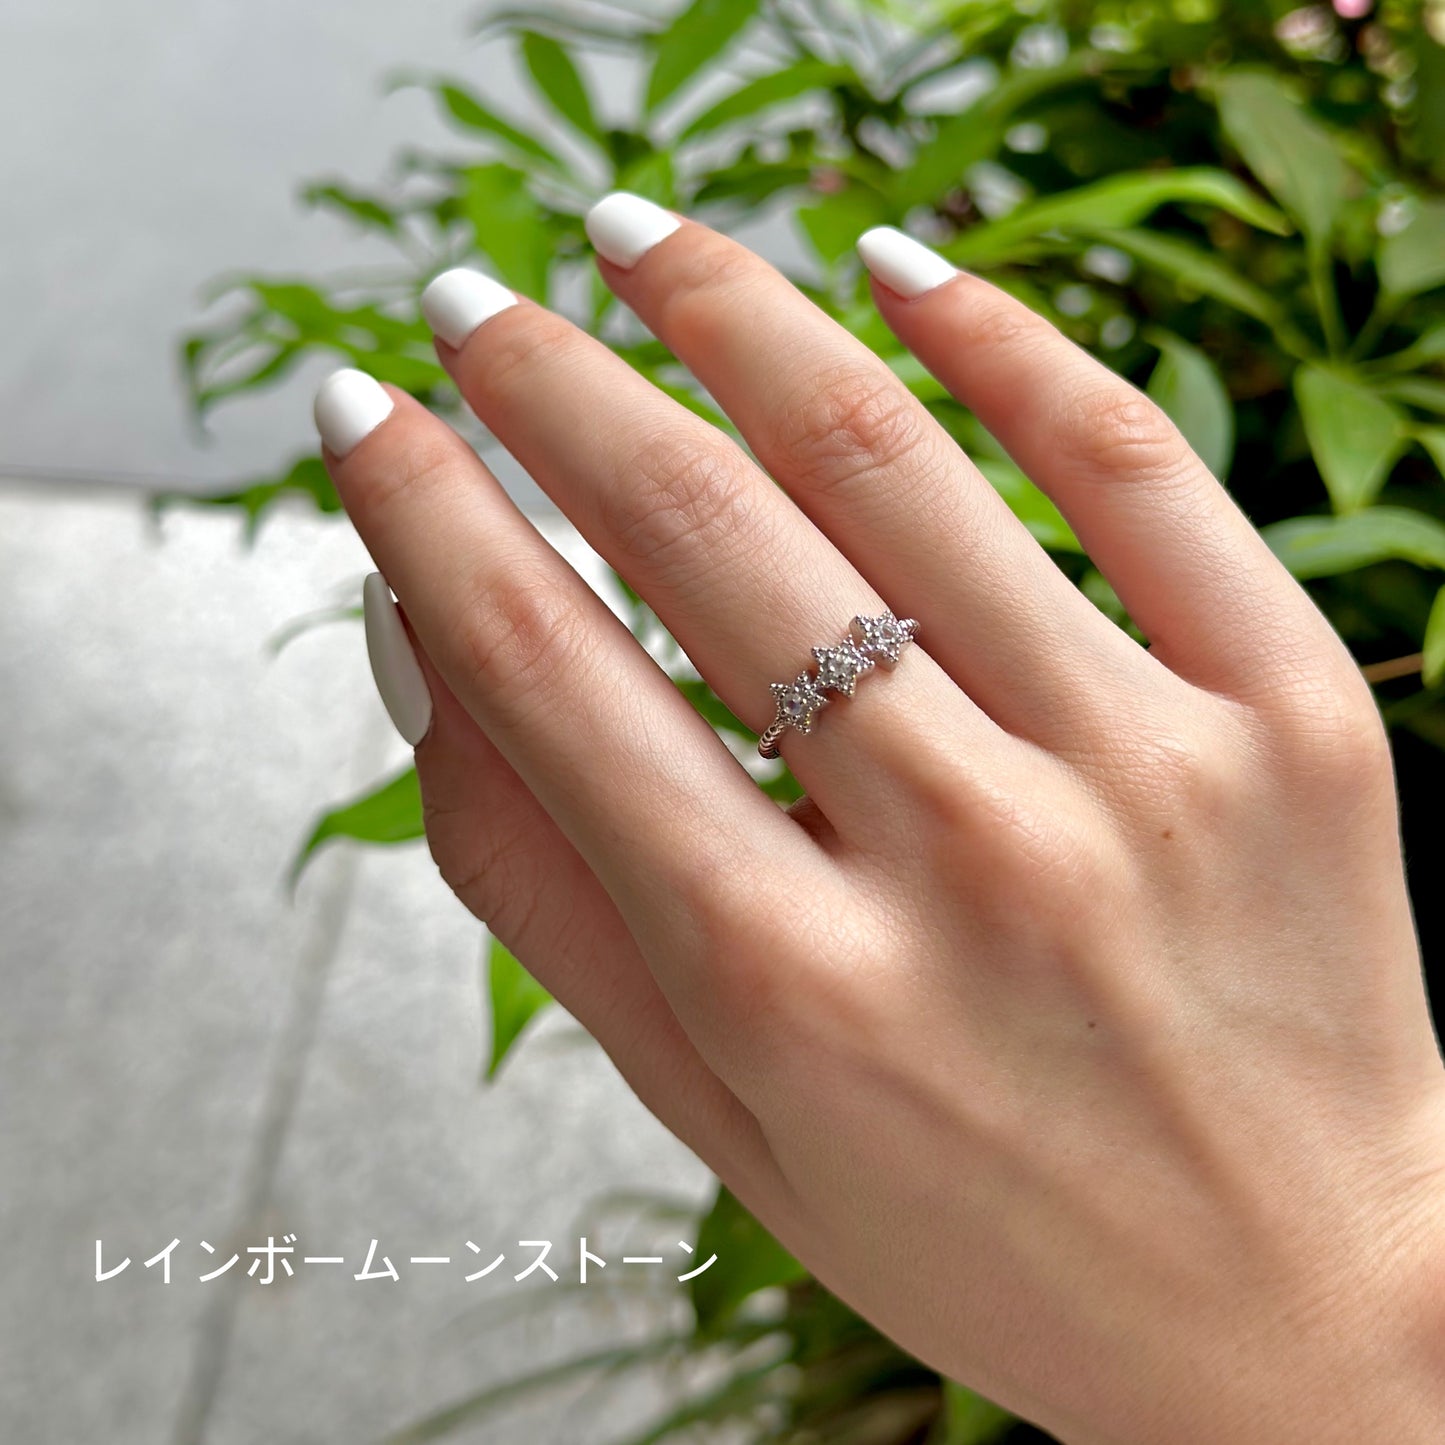 【poco】Star design ring